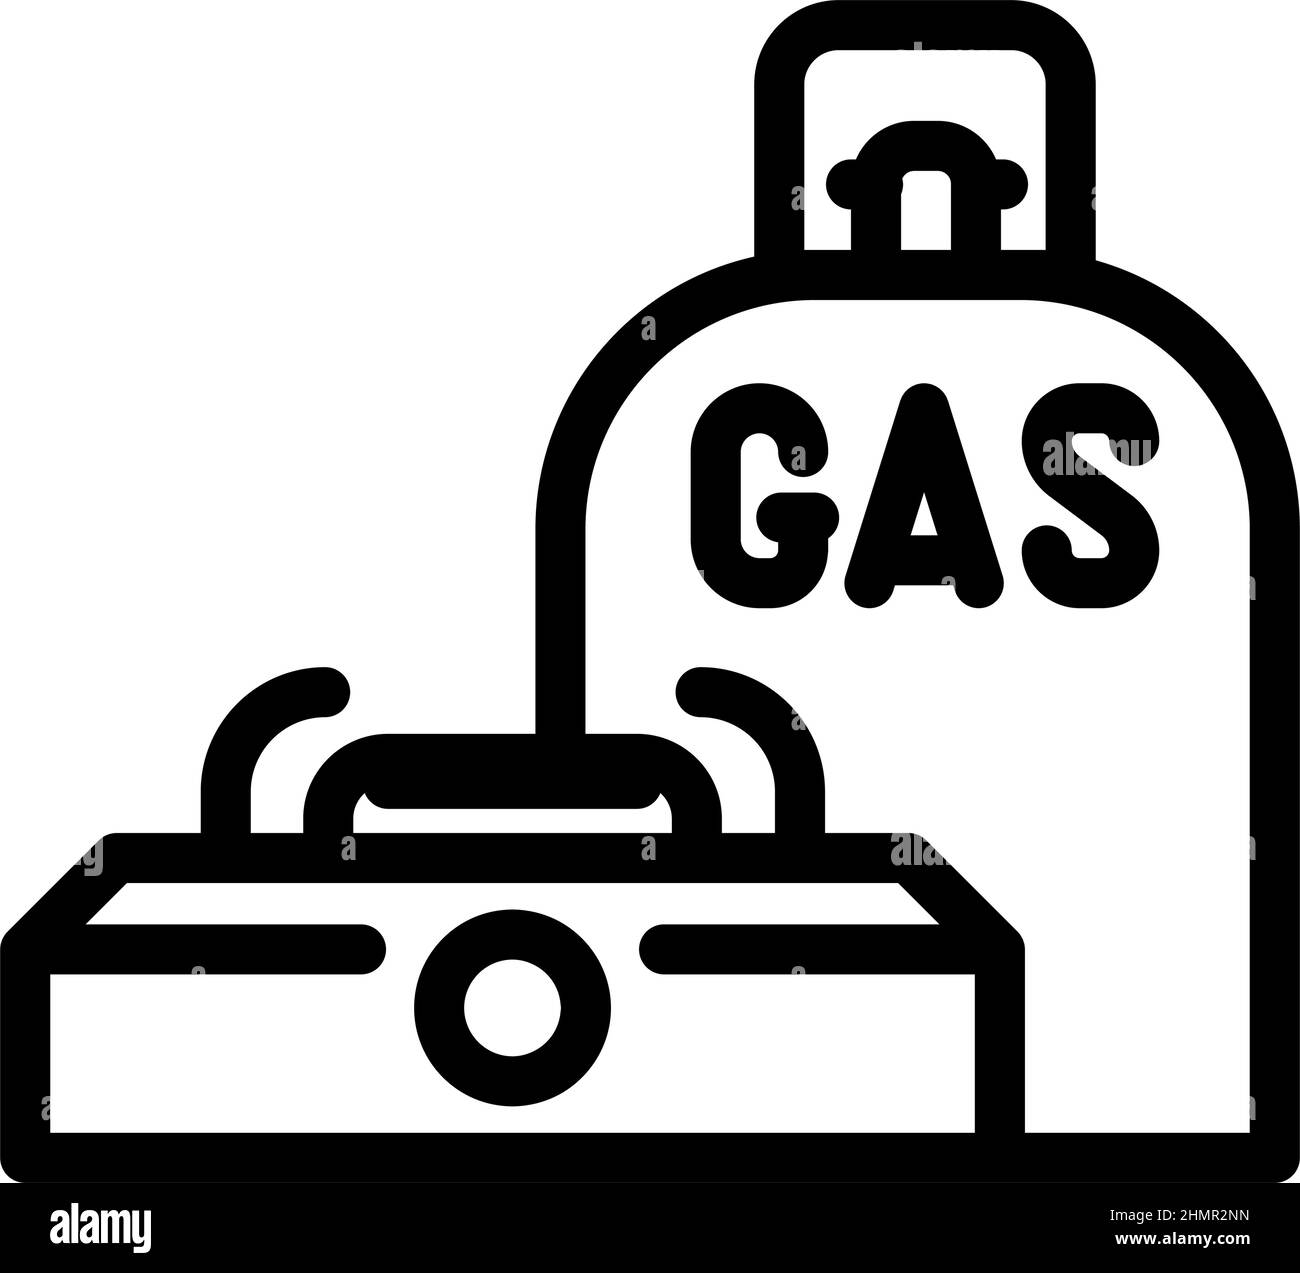 gas cooktop line icon vector illustration Stock Vector